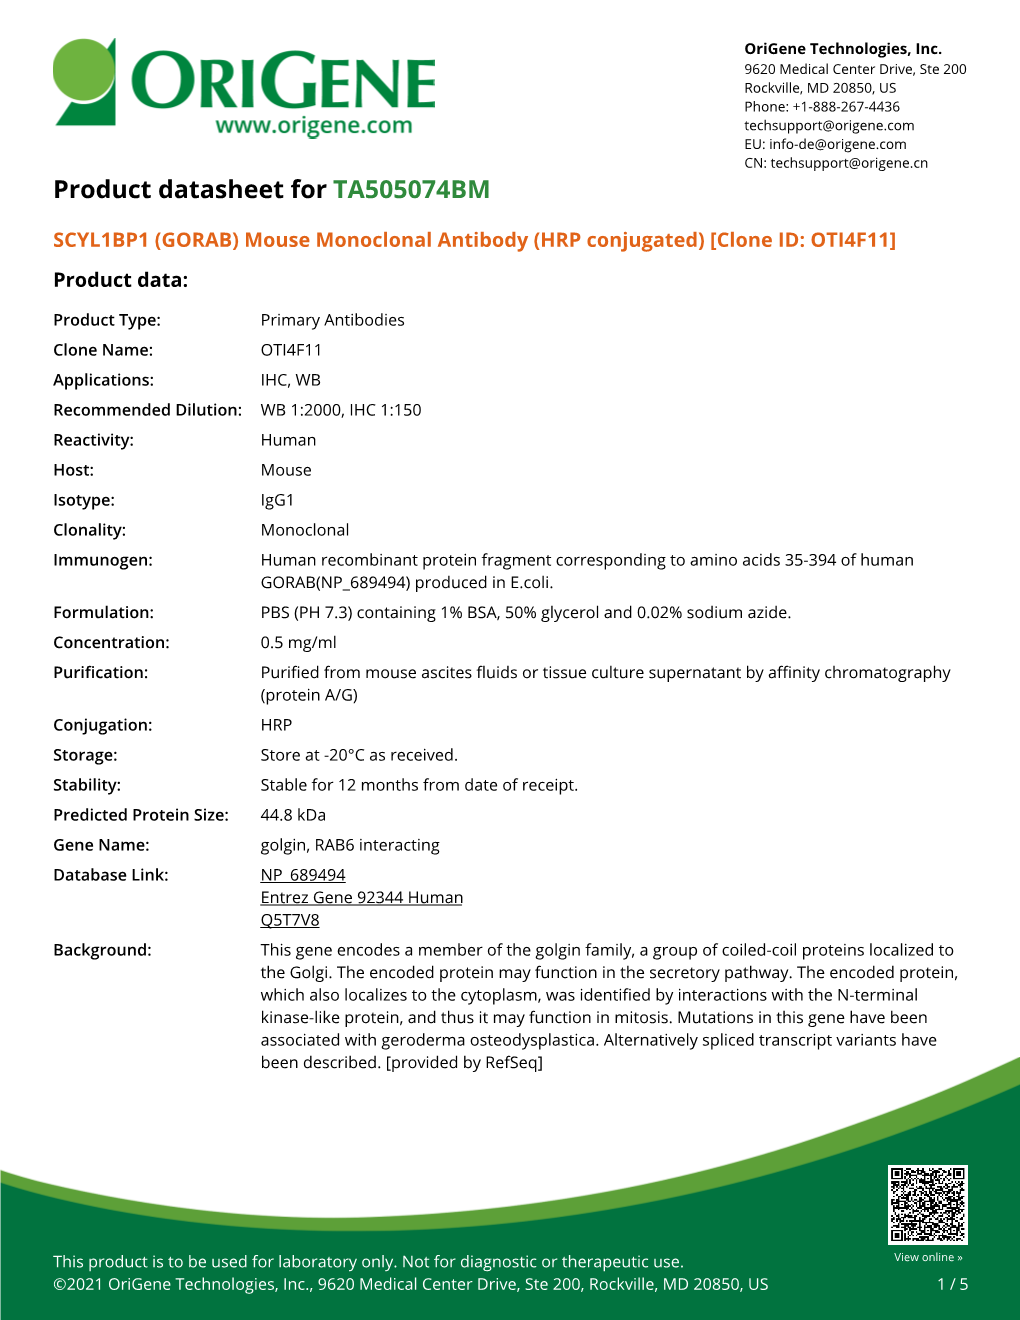 SCYL1BP1 (GORAB) Mouse Monoclonal Antibody (HRP Conjugated) [Clone ID: OTI4F11] Product Data